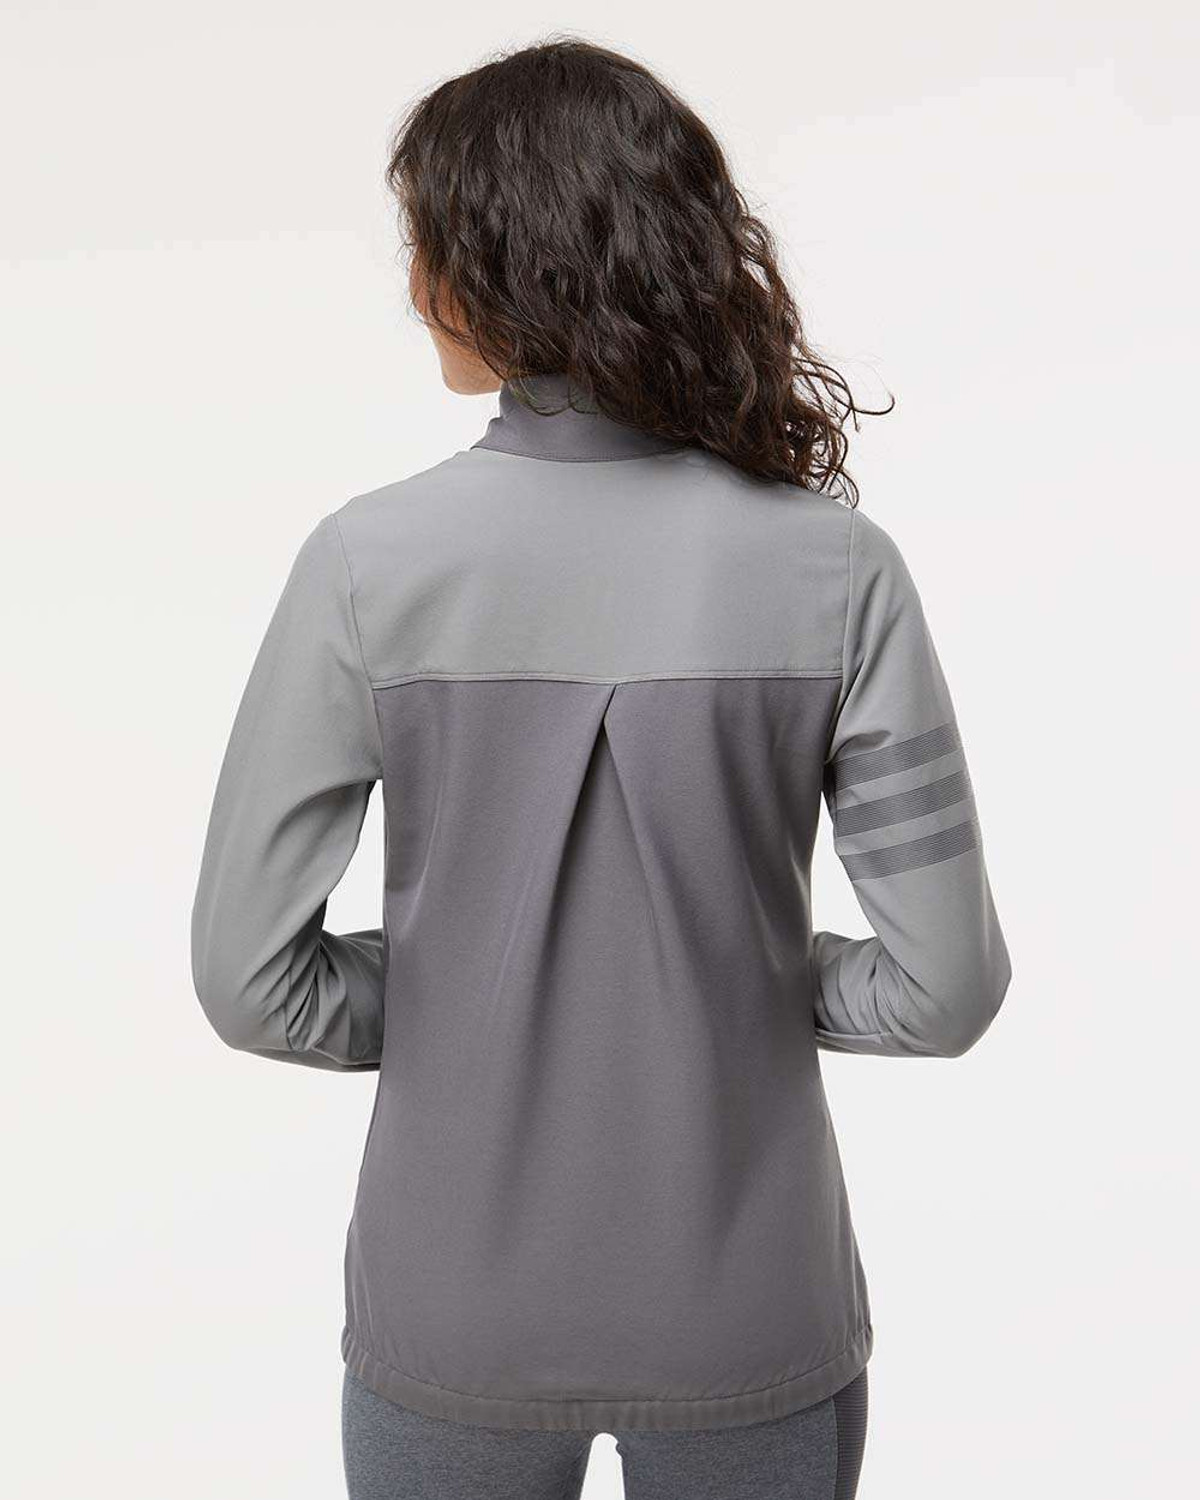 Women’s Lululemon Athletica Striped Full Zip Hoodie Sweatshirt Sz 2 Black  Gray